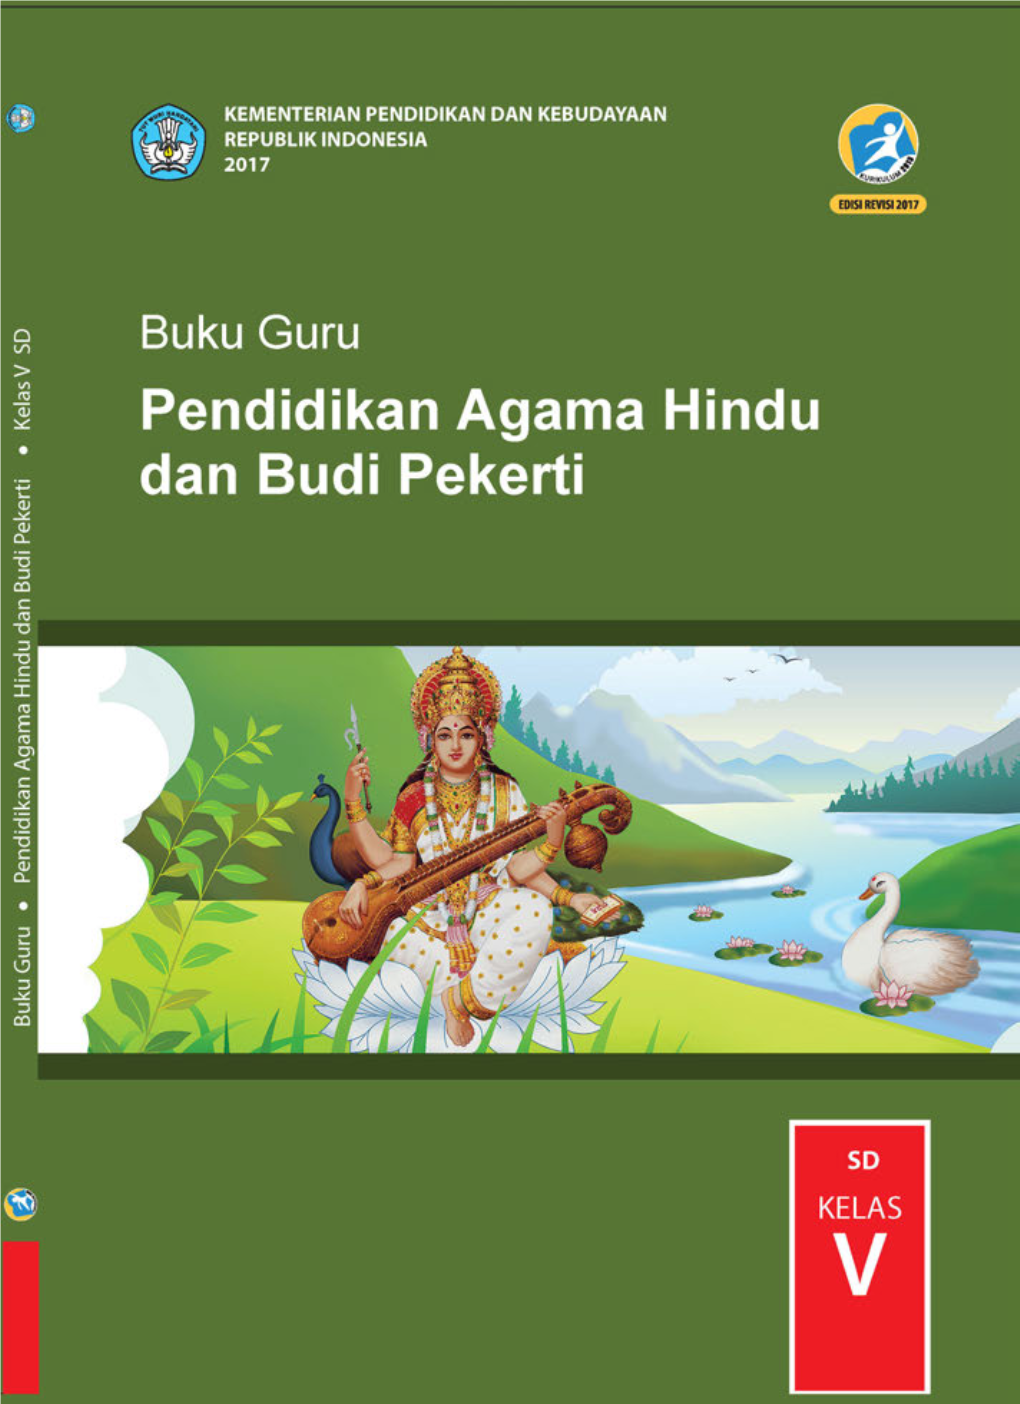 Buku Guru Hindu.Pdf